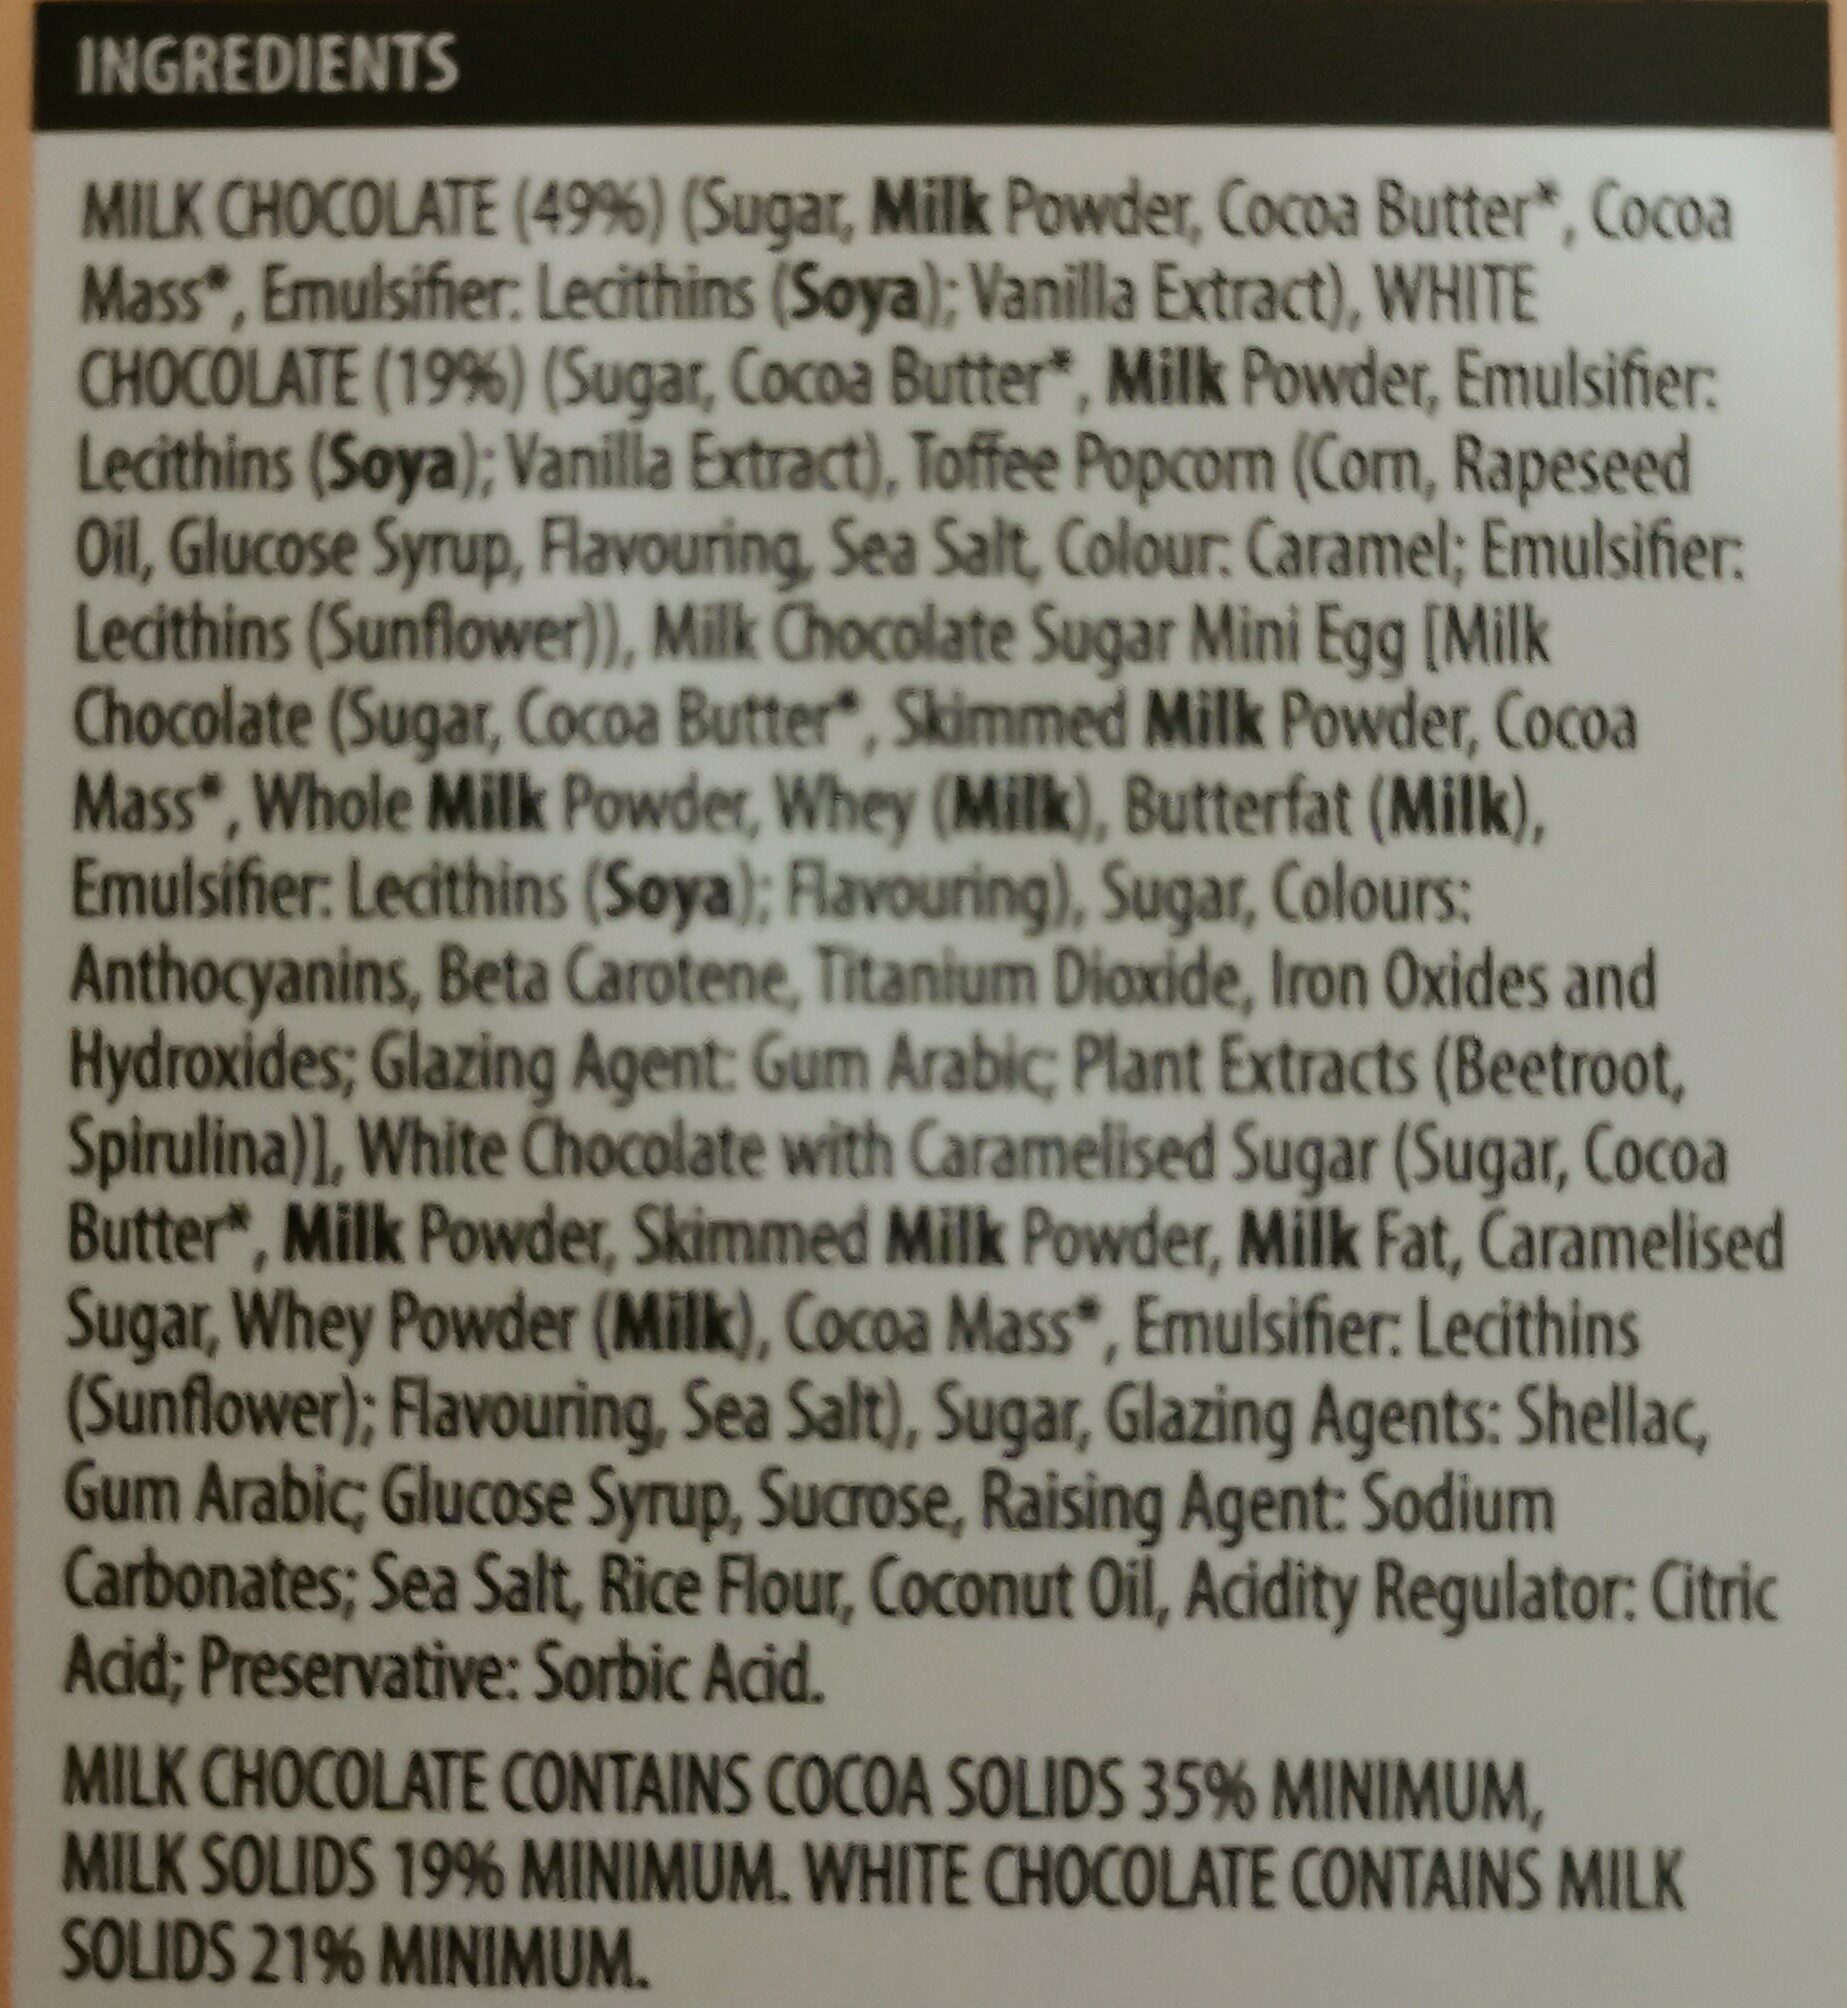 Milk chocolate sweet popcorn egg - Ingredients